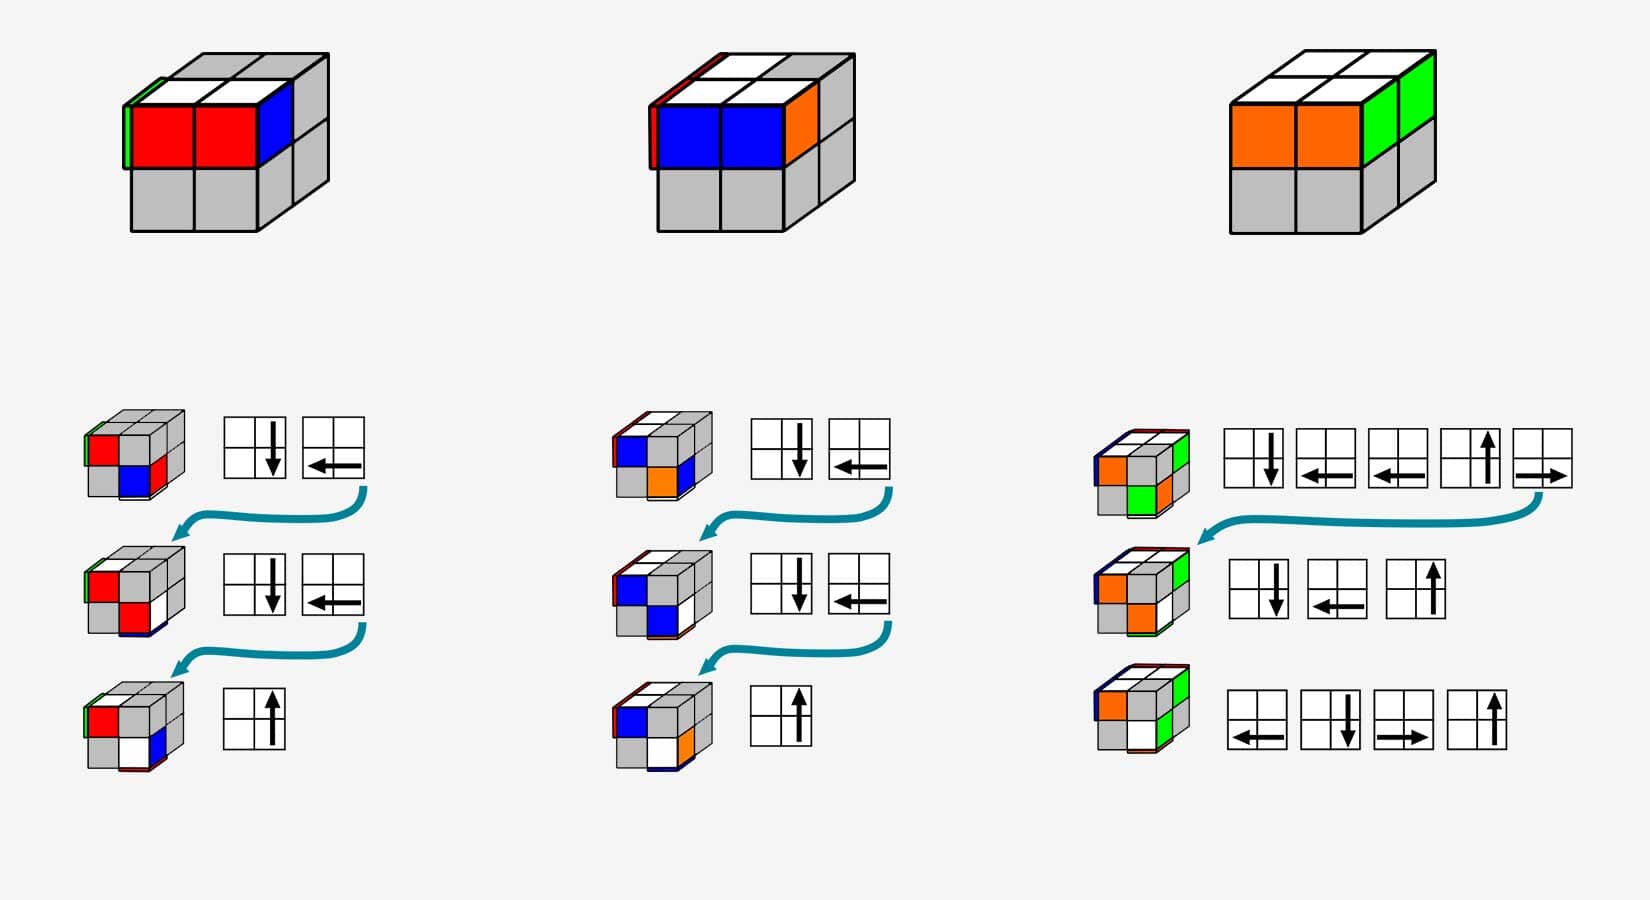 Online 2x2 Rubik's Cube Solver